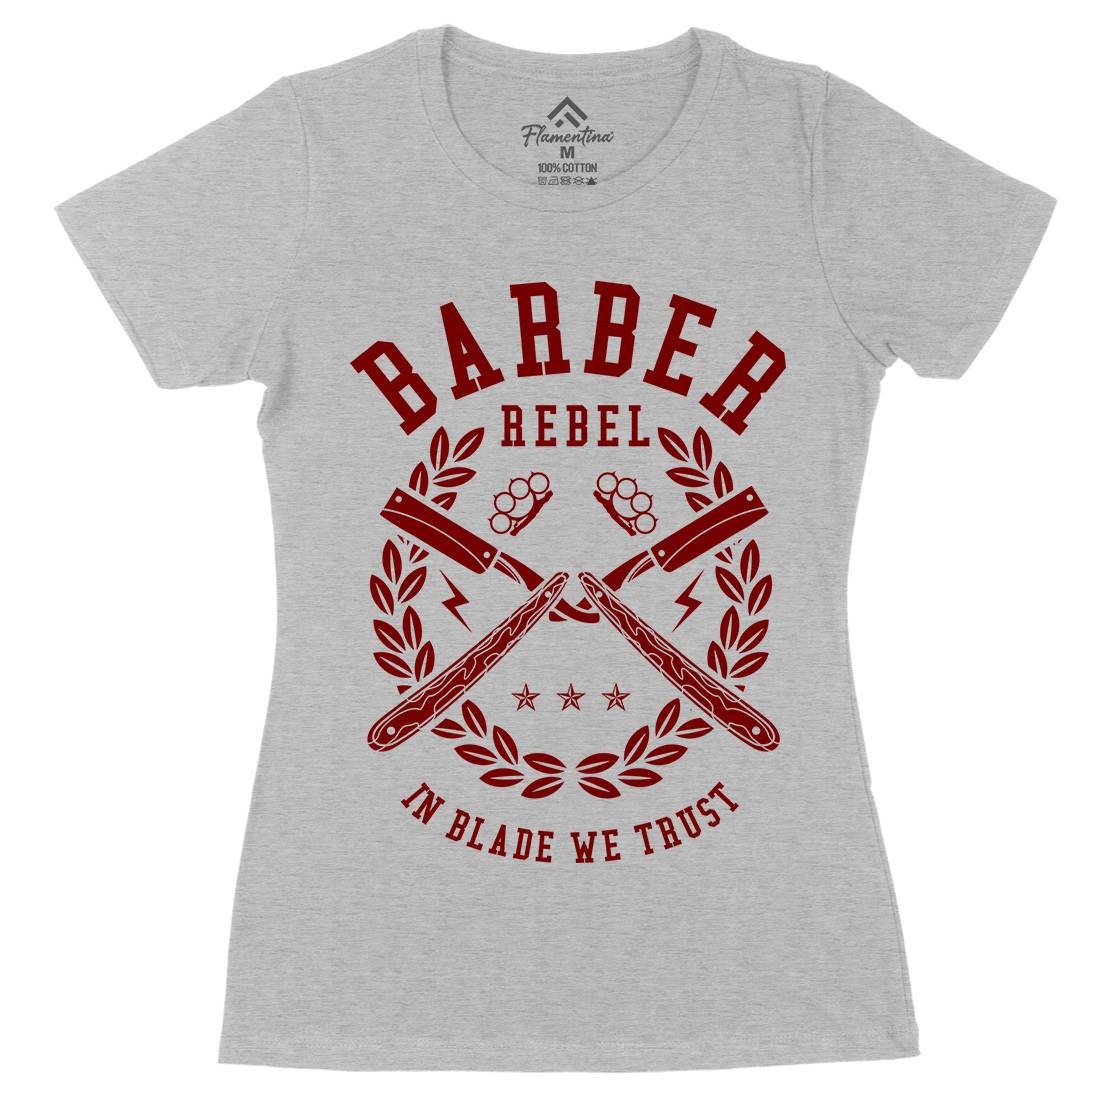 Rebel Womens Organic Crew Neck T-Shirt Barber A203